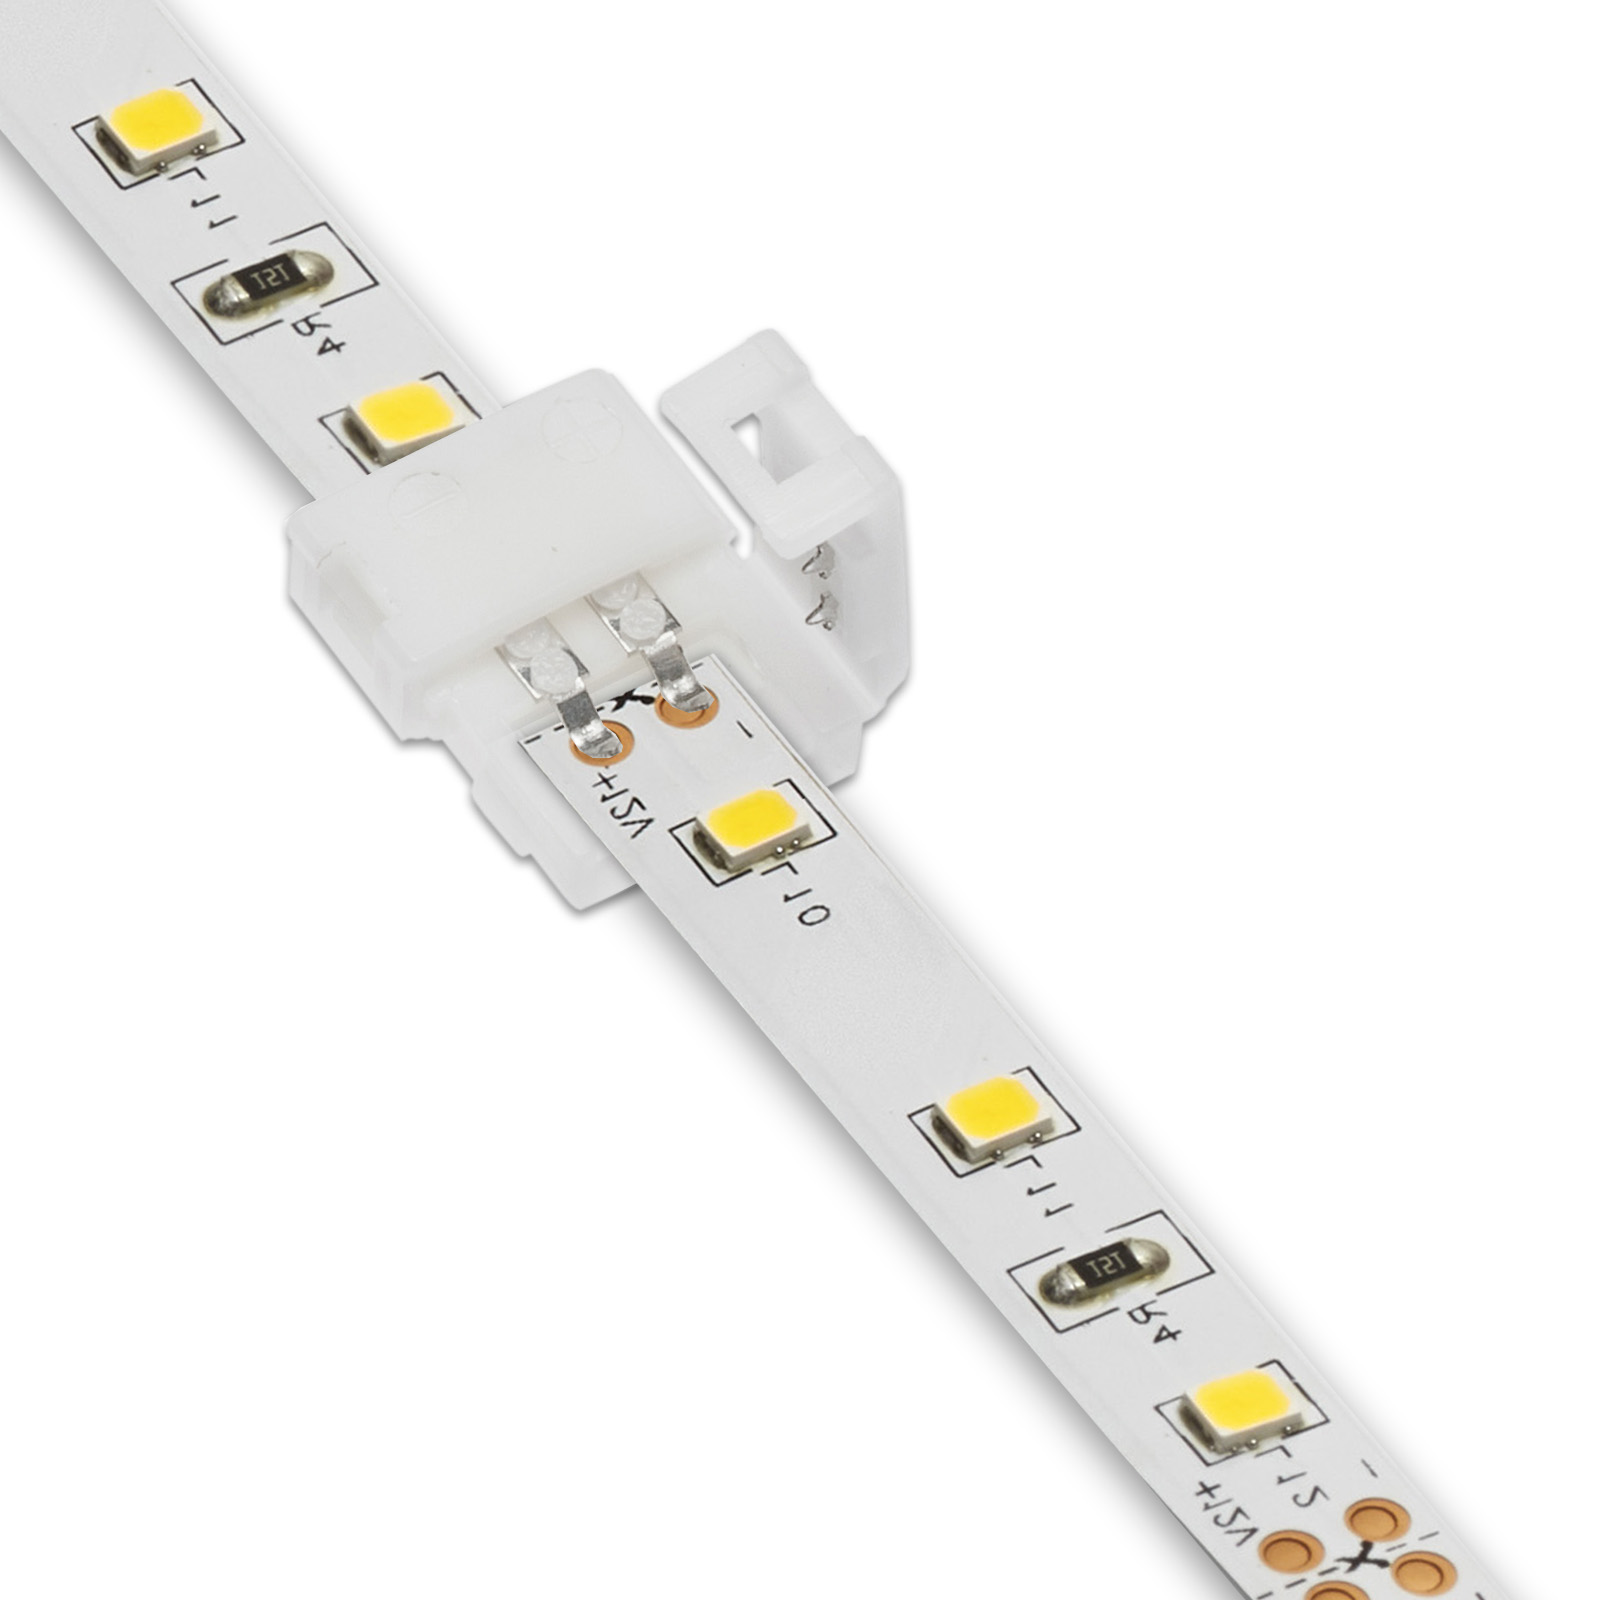 LED Streifen Verbinder 6 polig